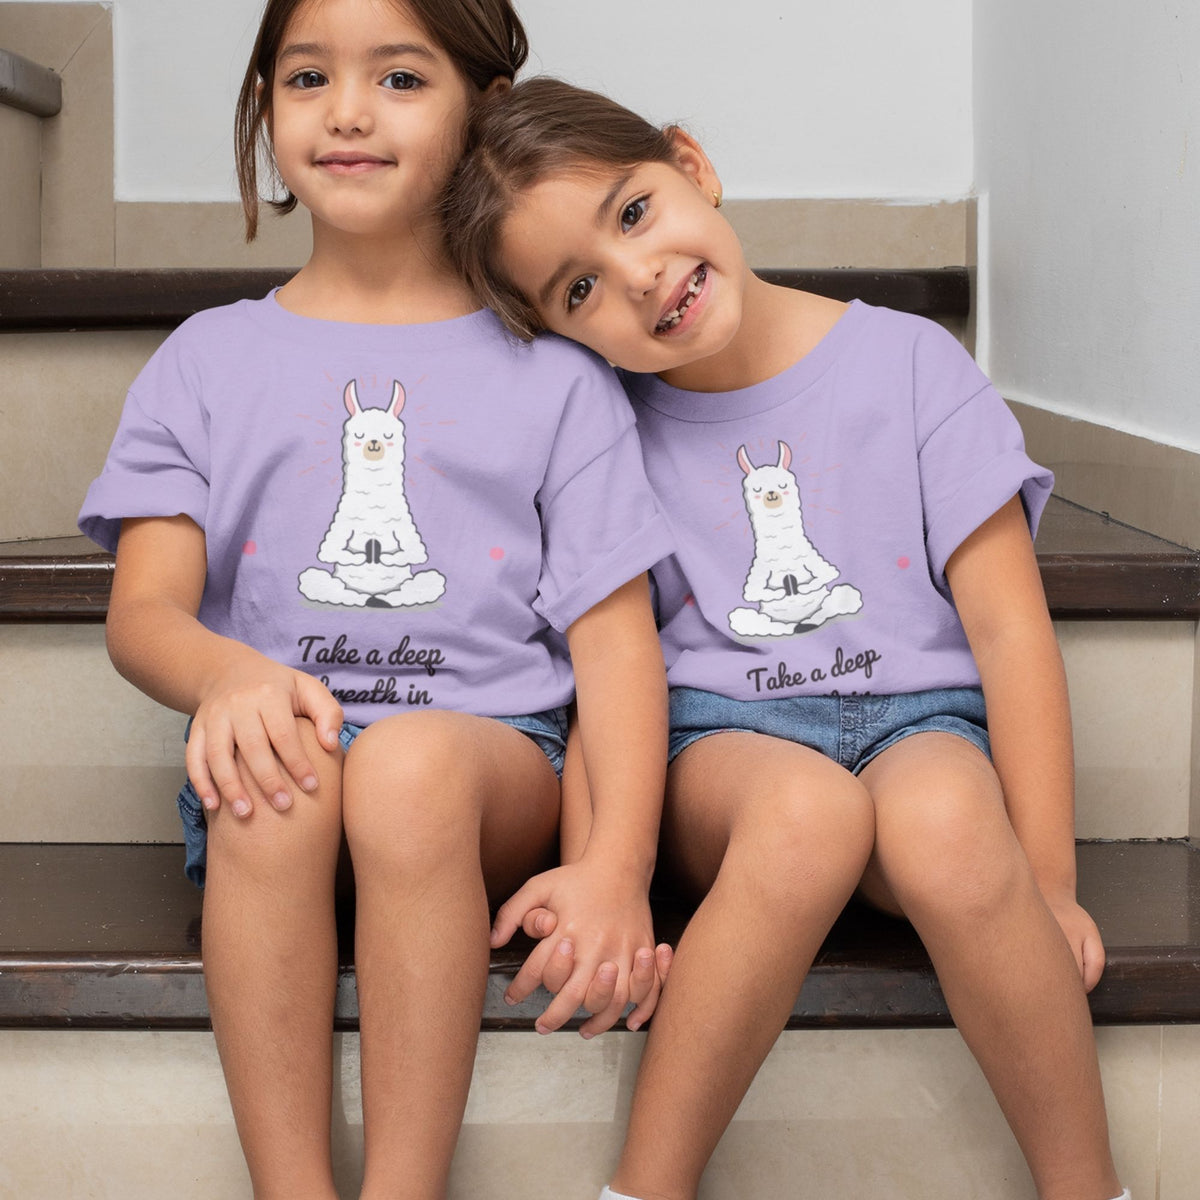 take-a-deep-breadth-in-lavender-kids-t-shirt_4